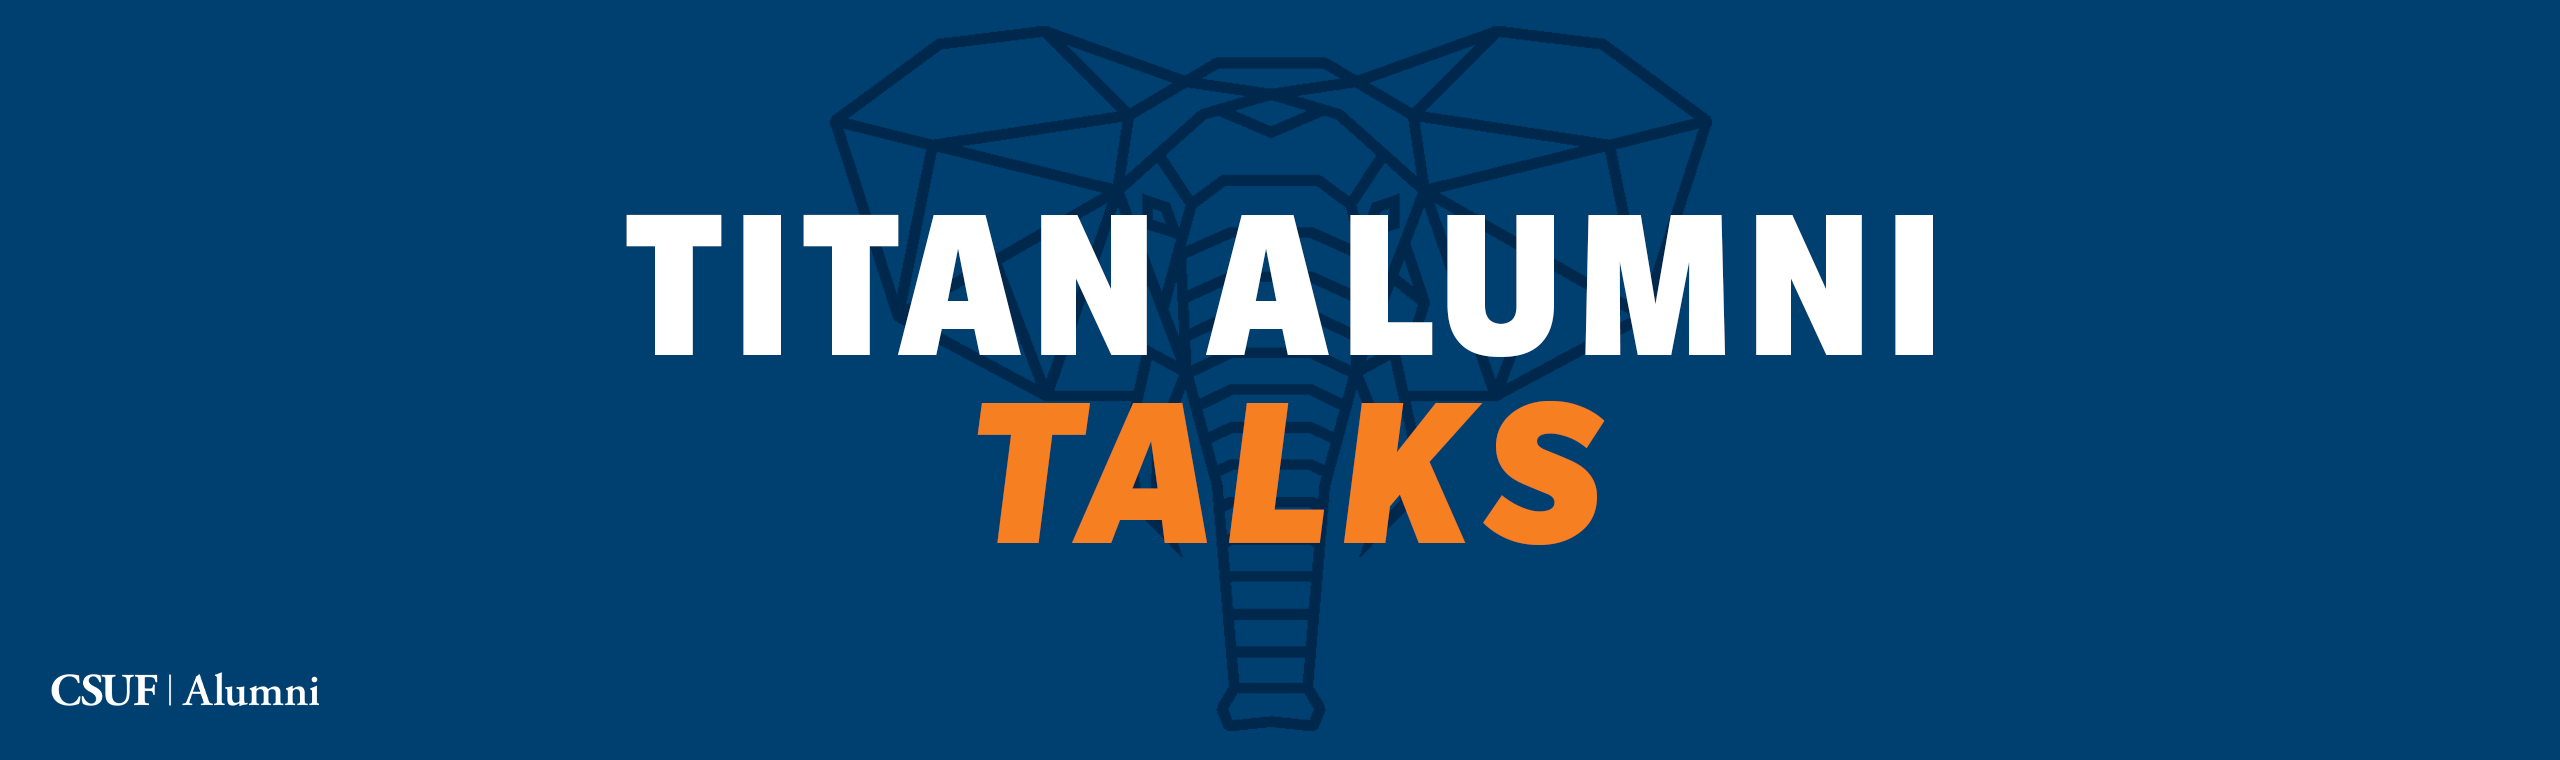 Titan Alumni talks logo